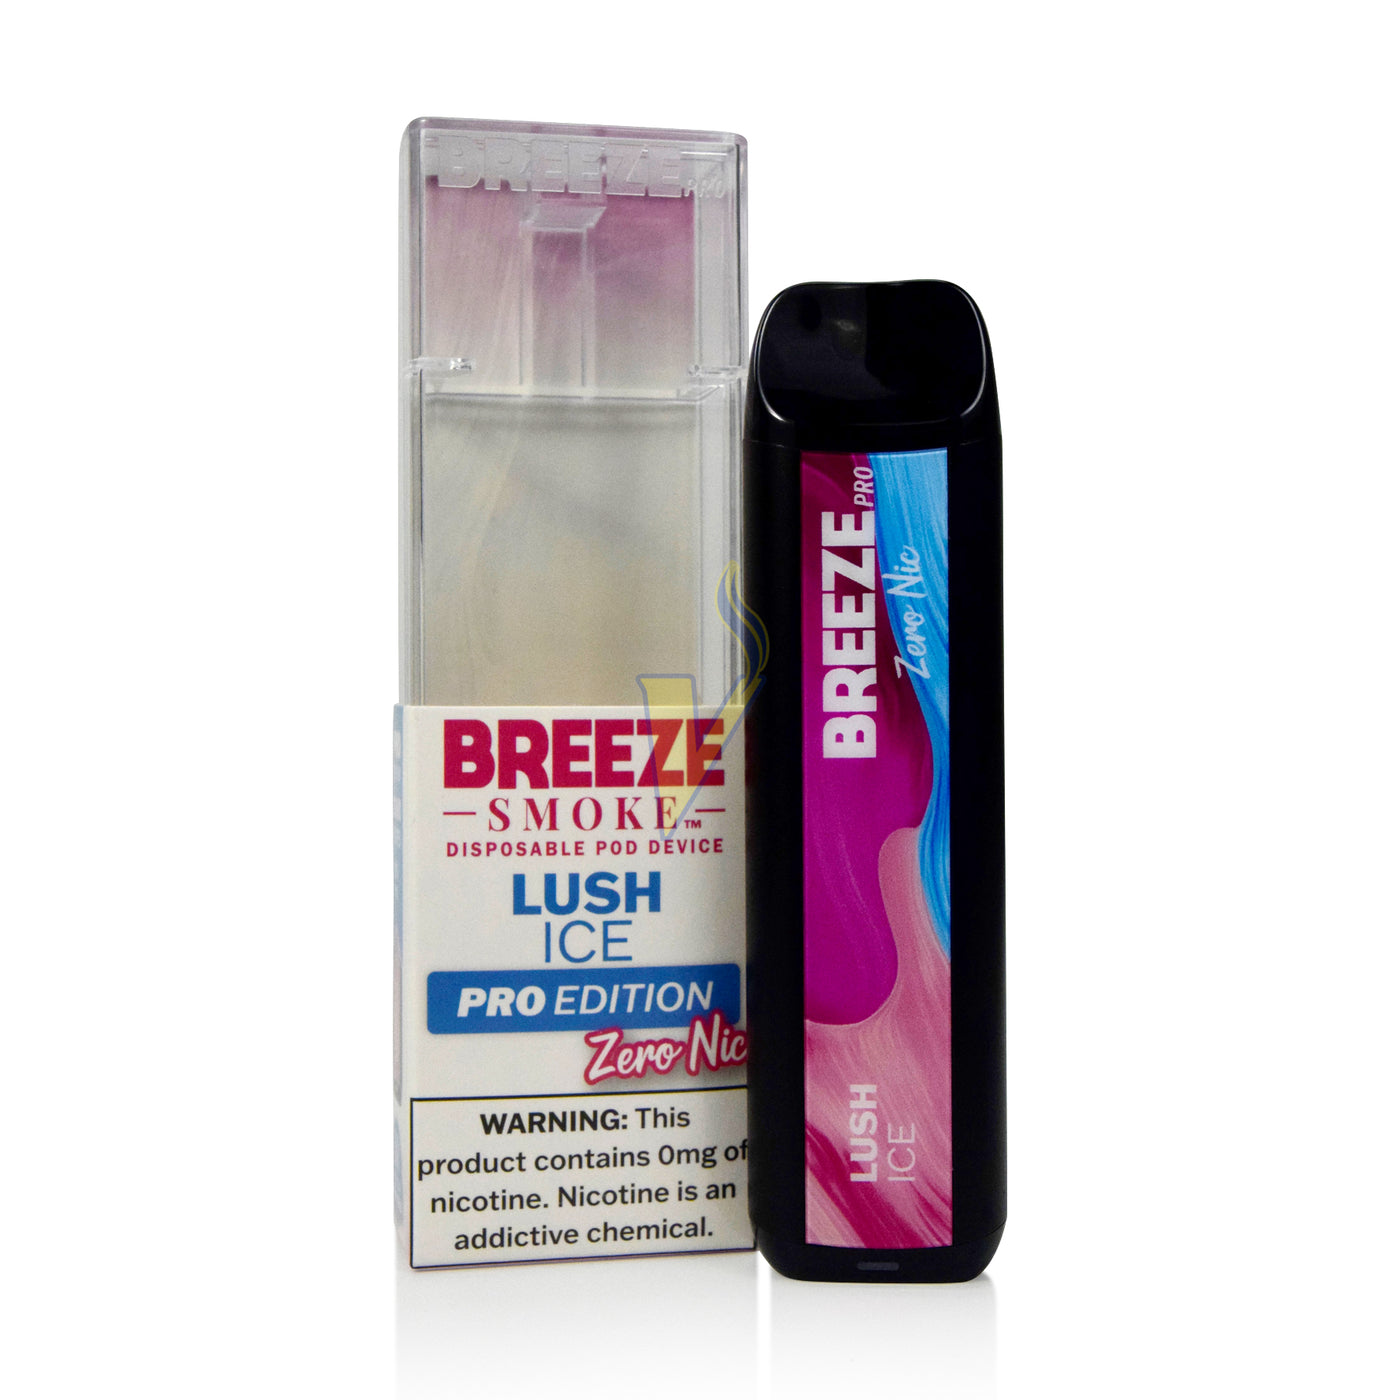 Breeze Pro 0% Nicotine Disposable Vape – The Vapor Shoppe